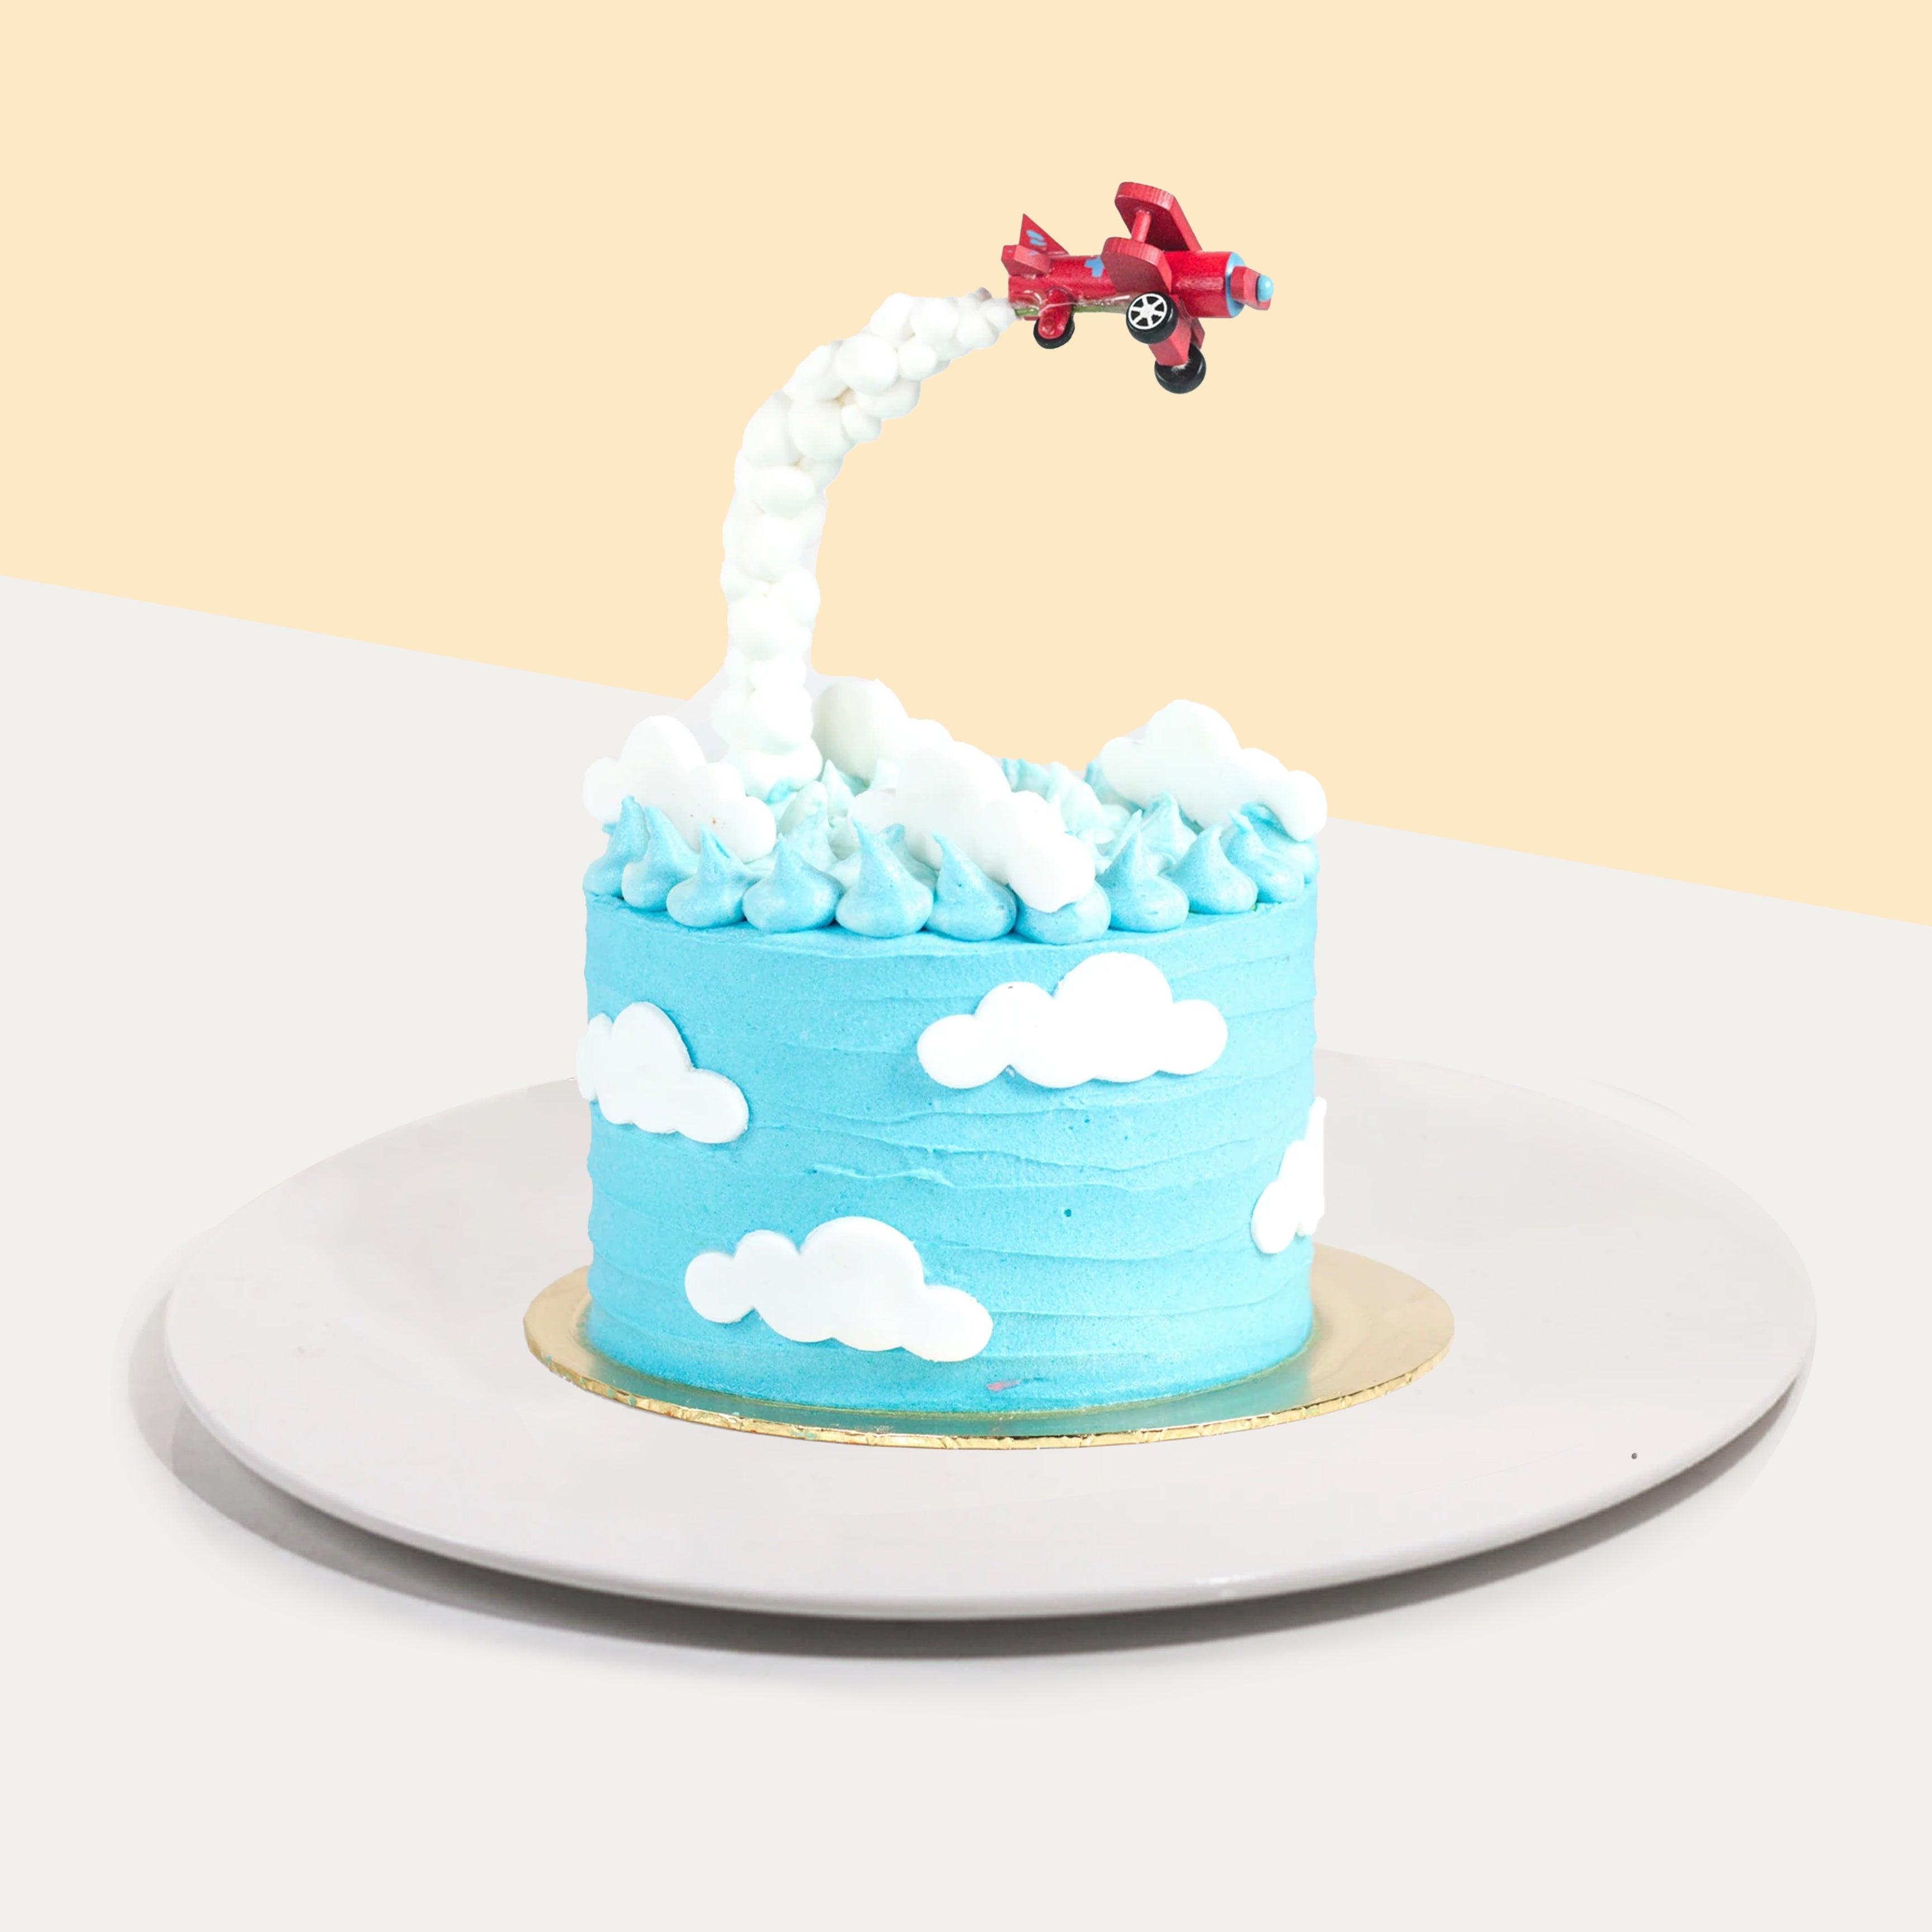 Dusty the Plane Cake | Disney planes cake, Party cakes, Planes cake